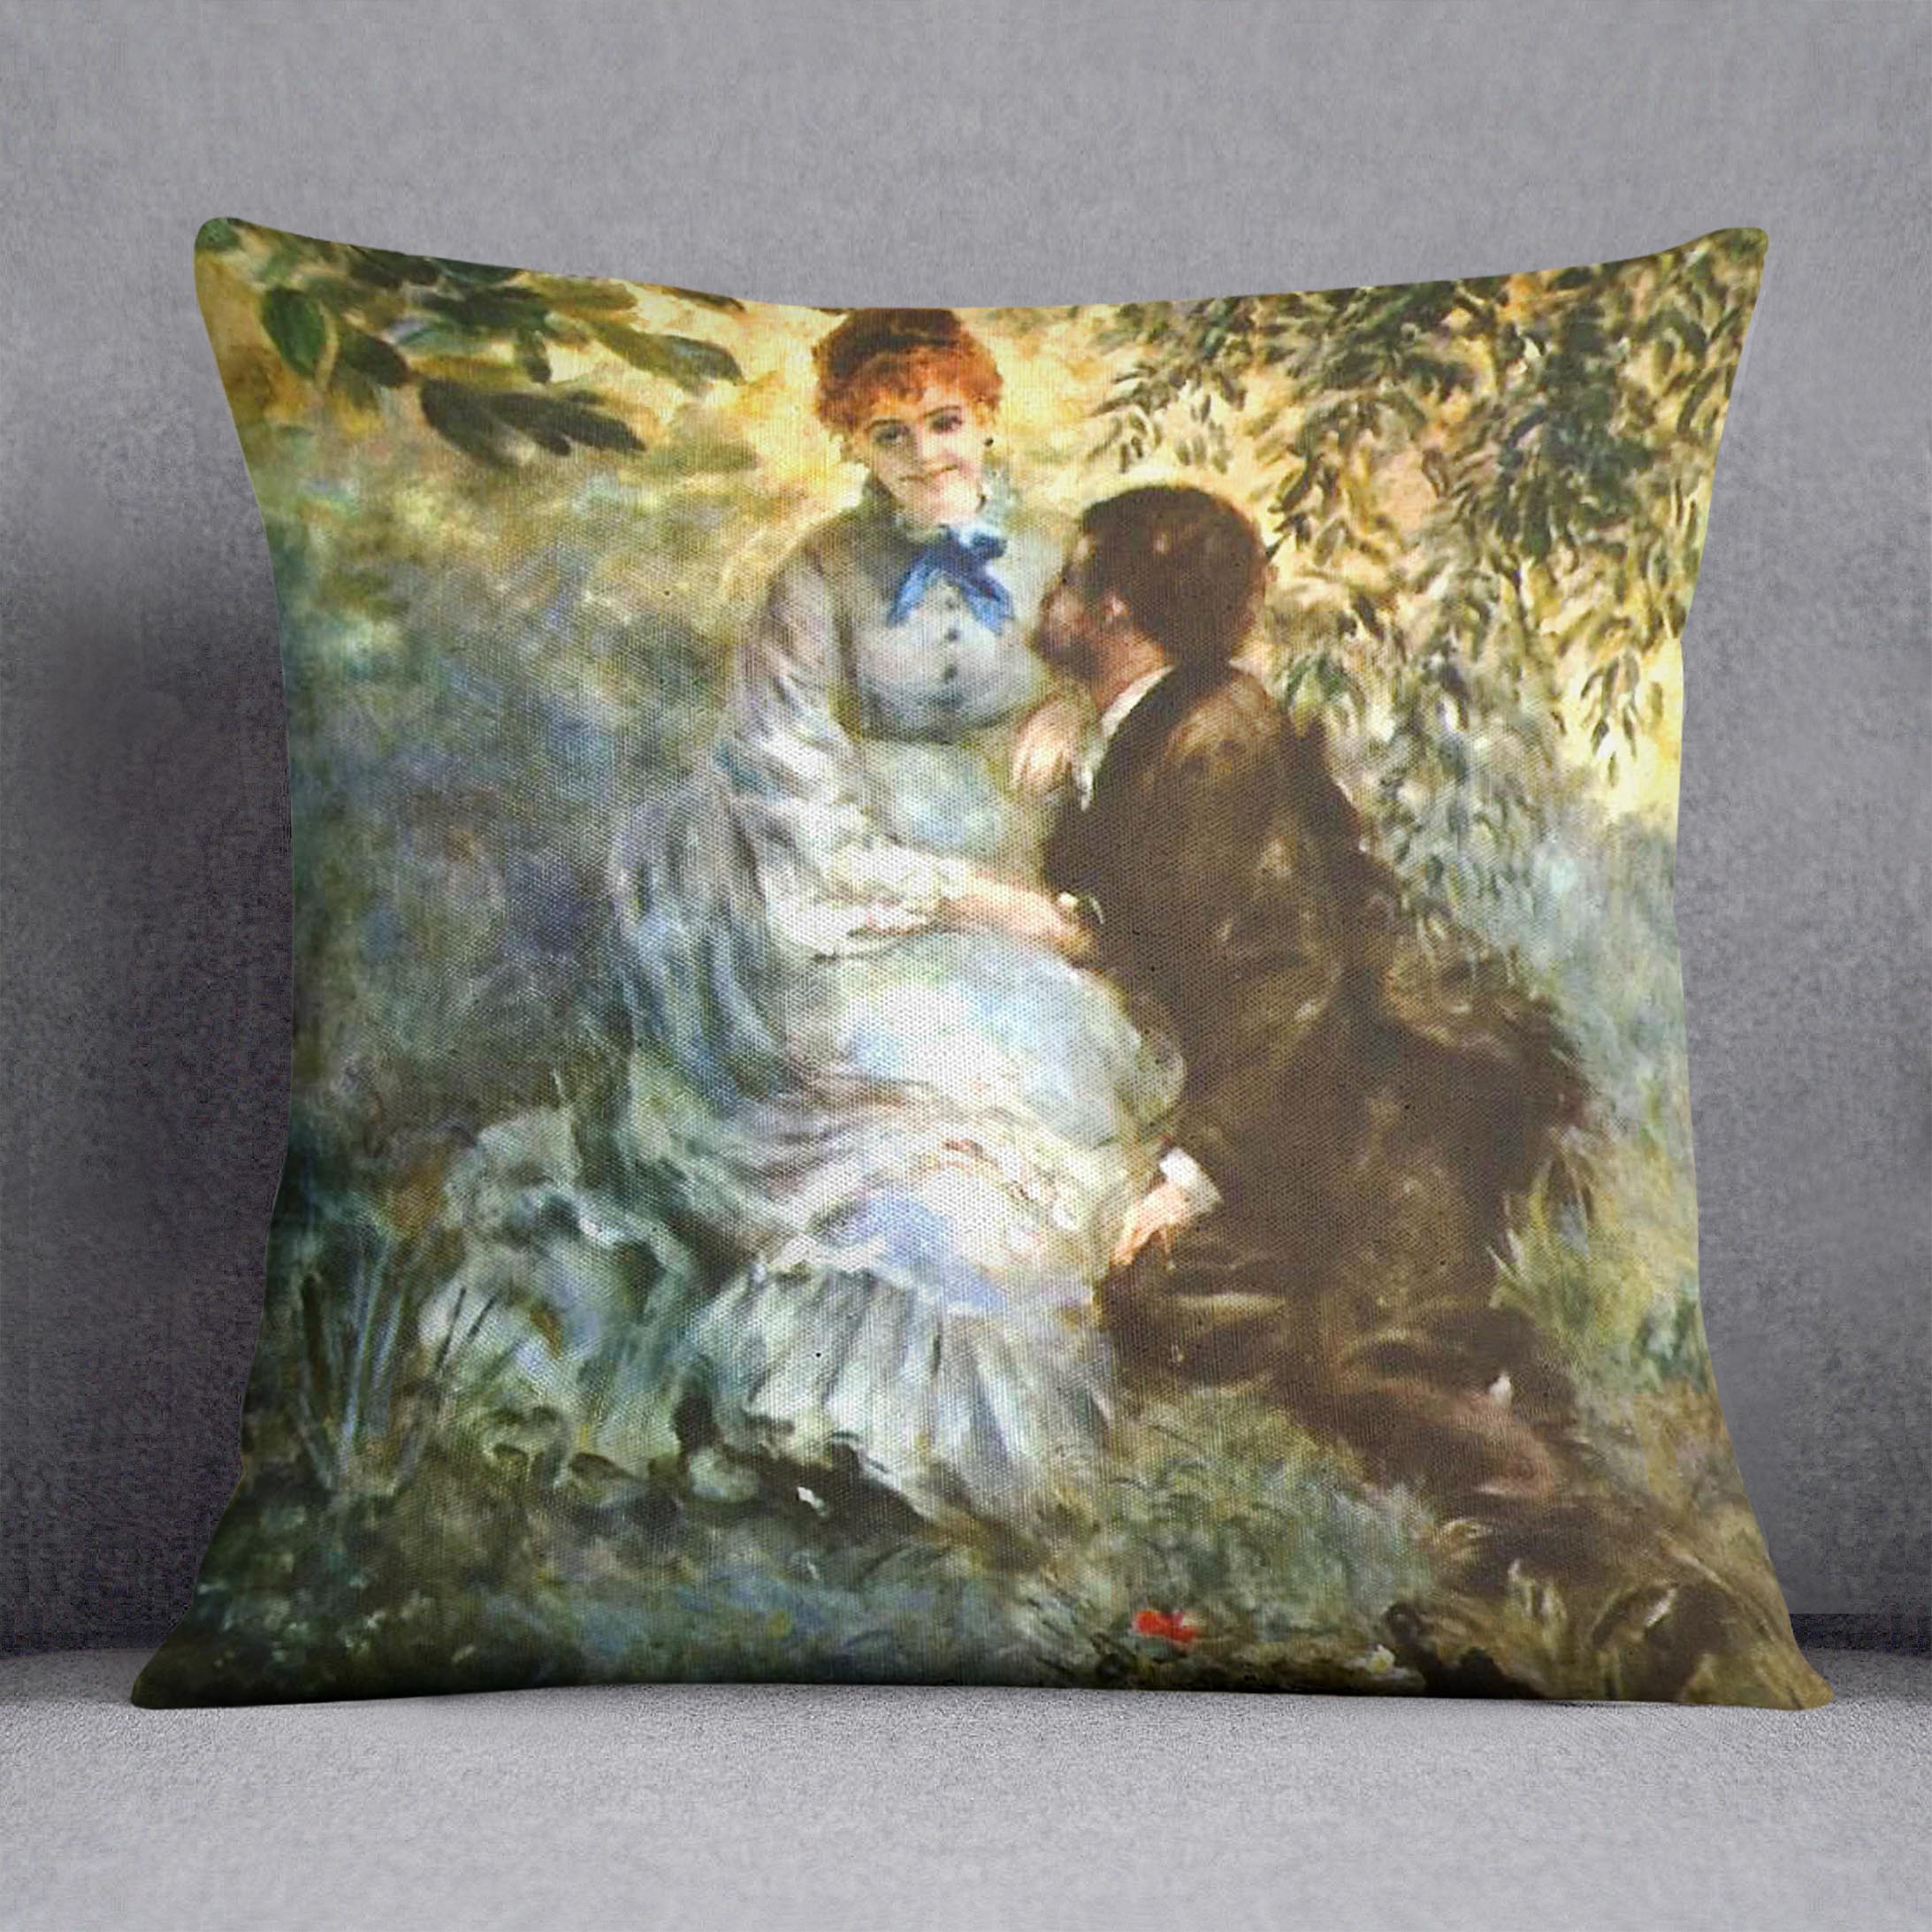 Twosome by Renoir Cushion